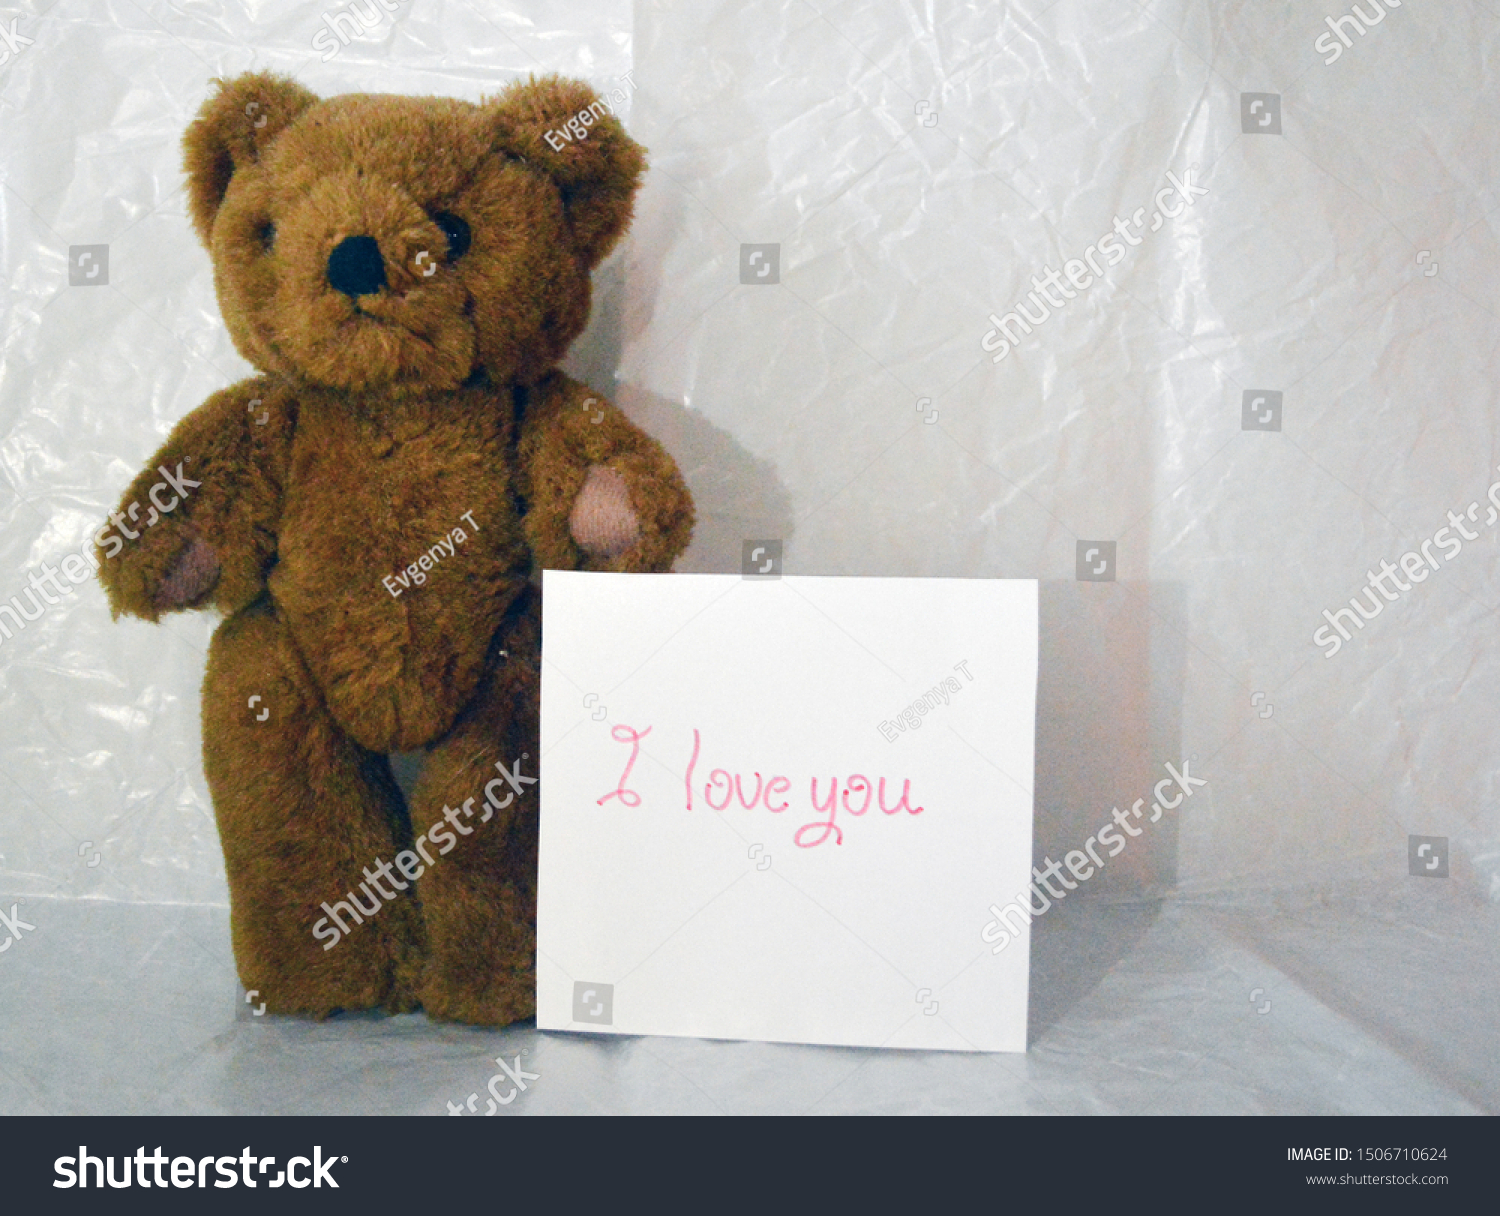 teddy bears that say i love you